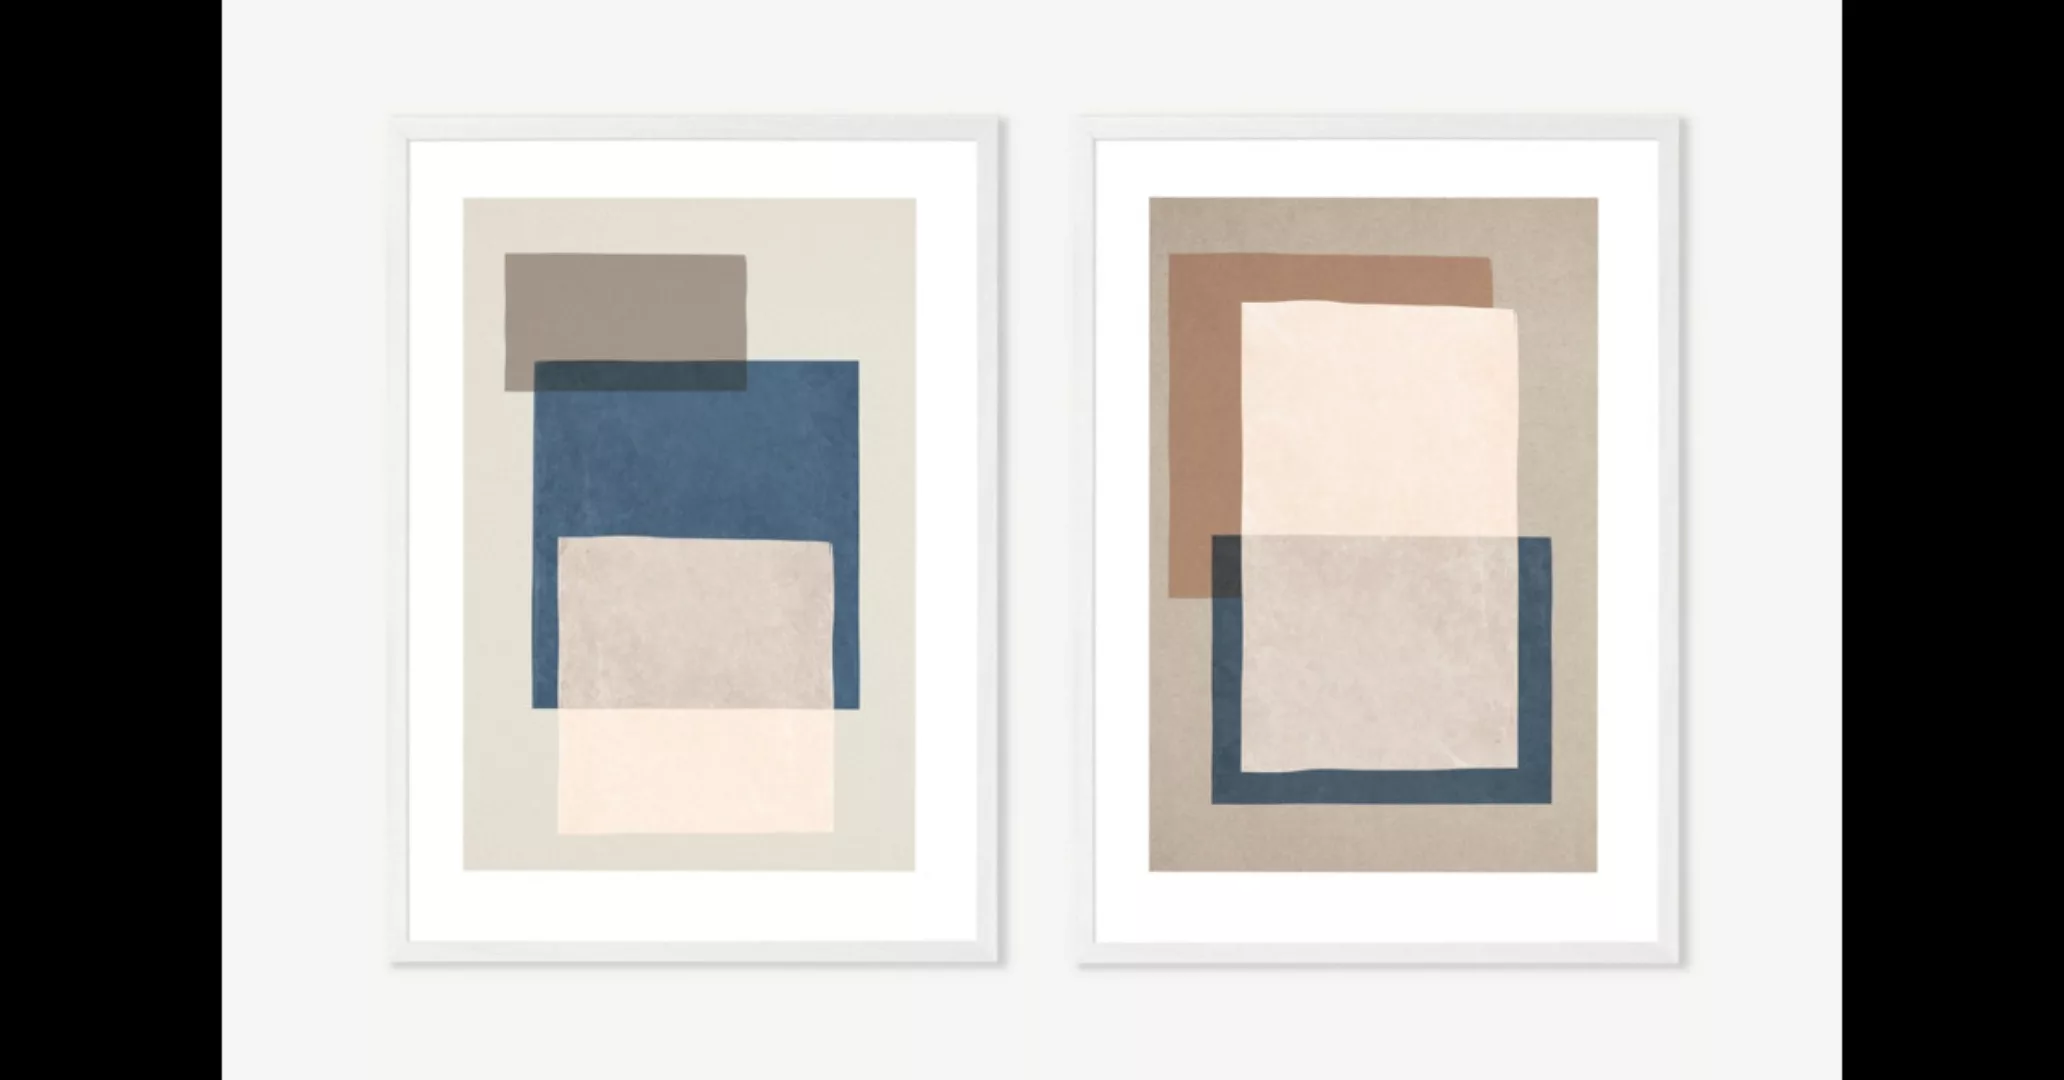 Maisey Design 'Soft Geometric' 2 x gerahmte Kunstdrucke (A2) - MADE.com günstig online kaufen